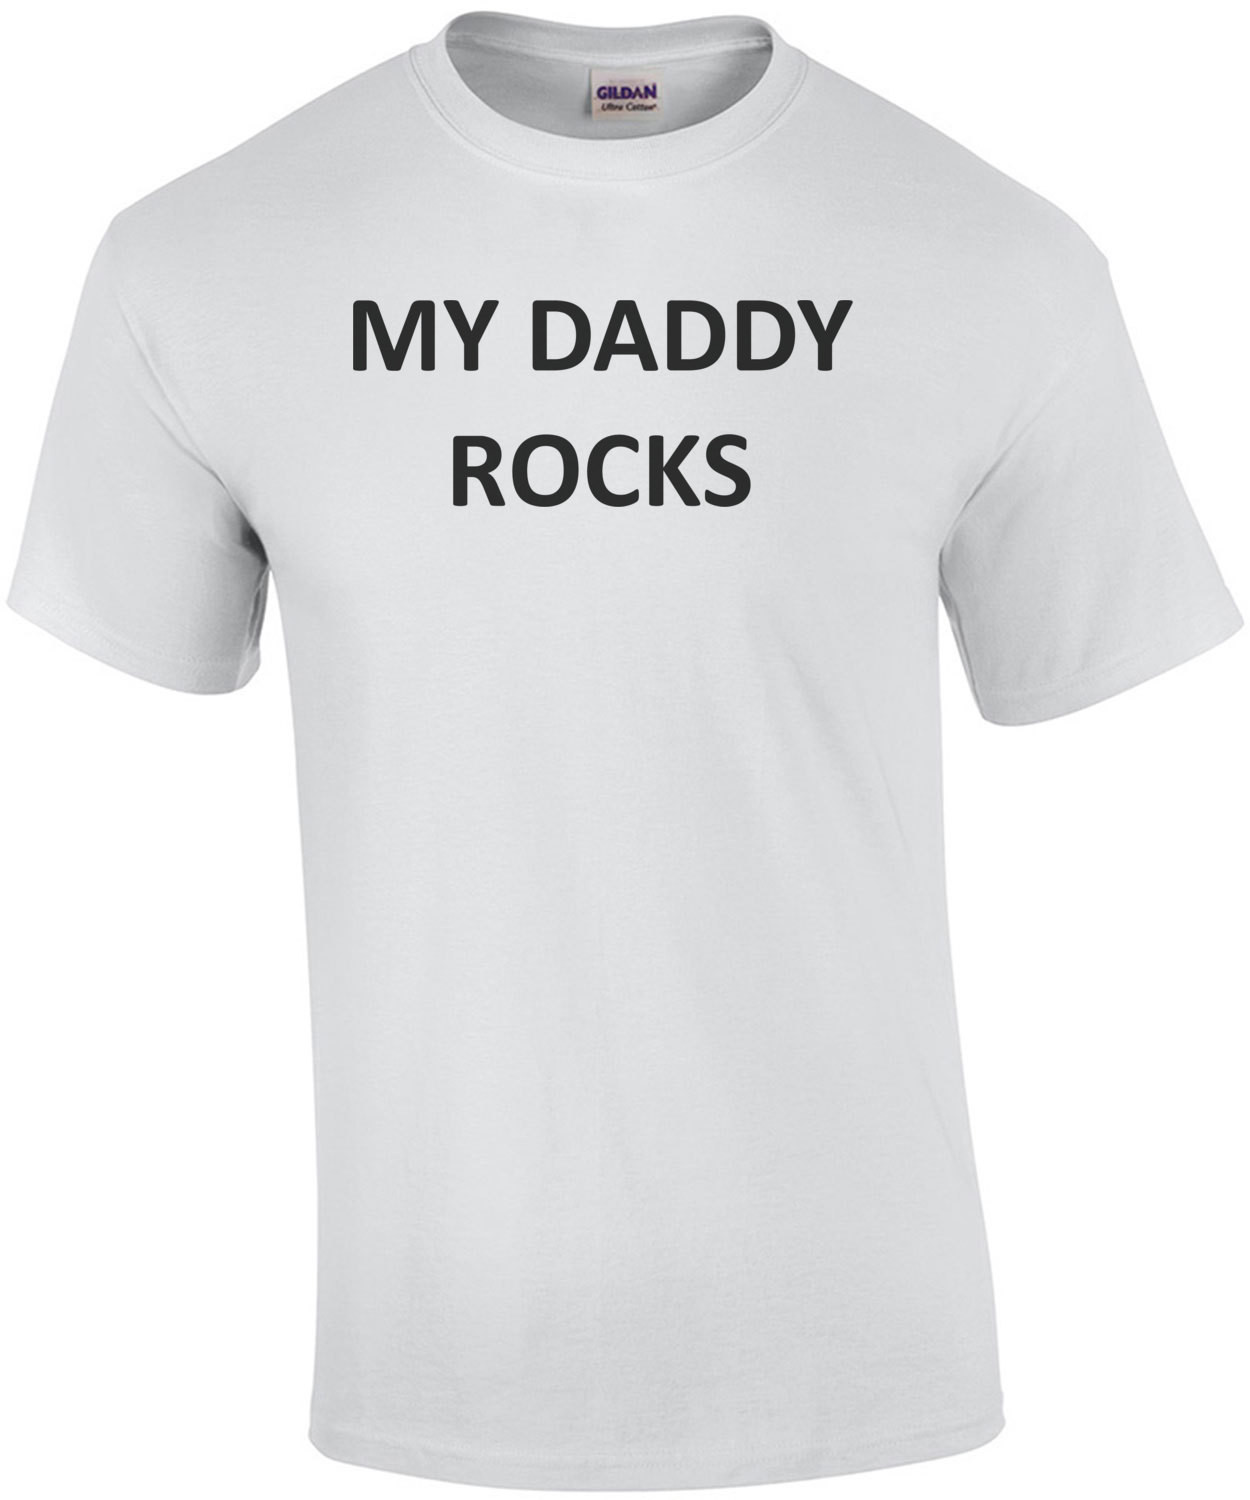 My Daddy Rocks Shirt